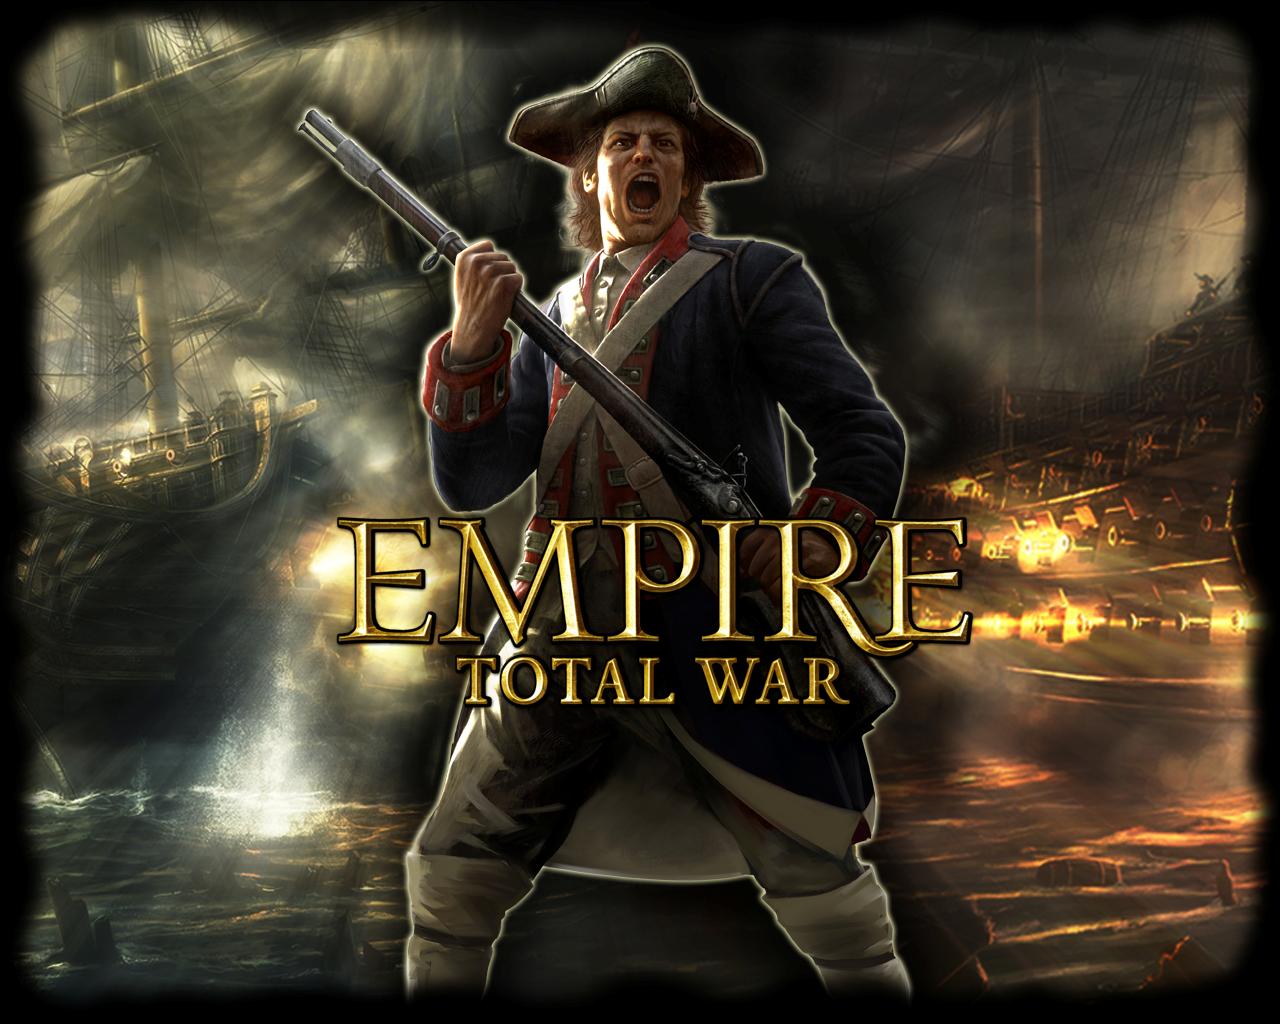 Foton Total War Empire: Total War dataspel spel Datorspel